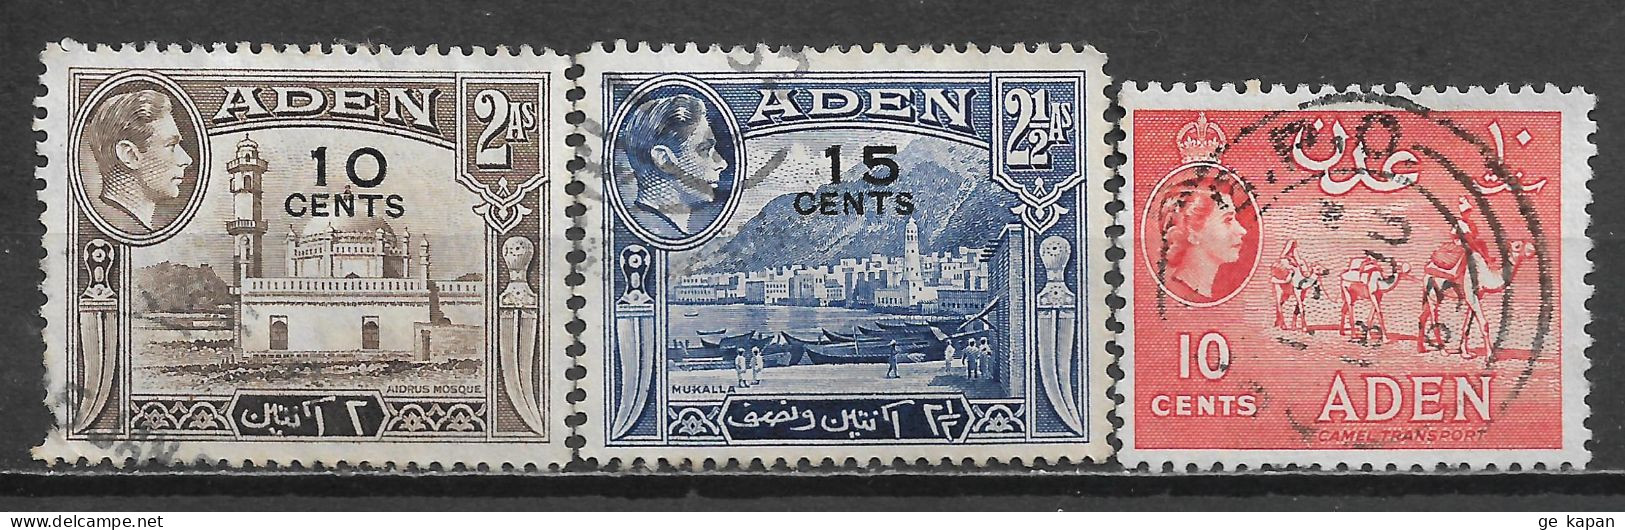 1951,1953 ADEN Set Of 3 USED STAMPS (Michel # 38,39,50) CV €2.60 - Aden (1854-1963)